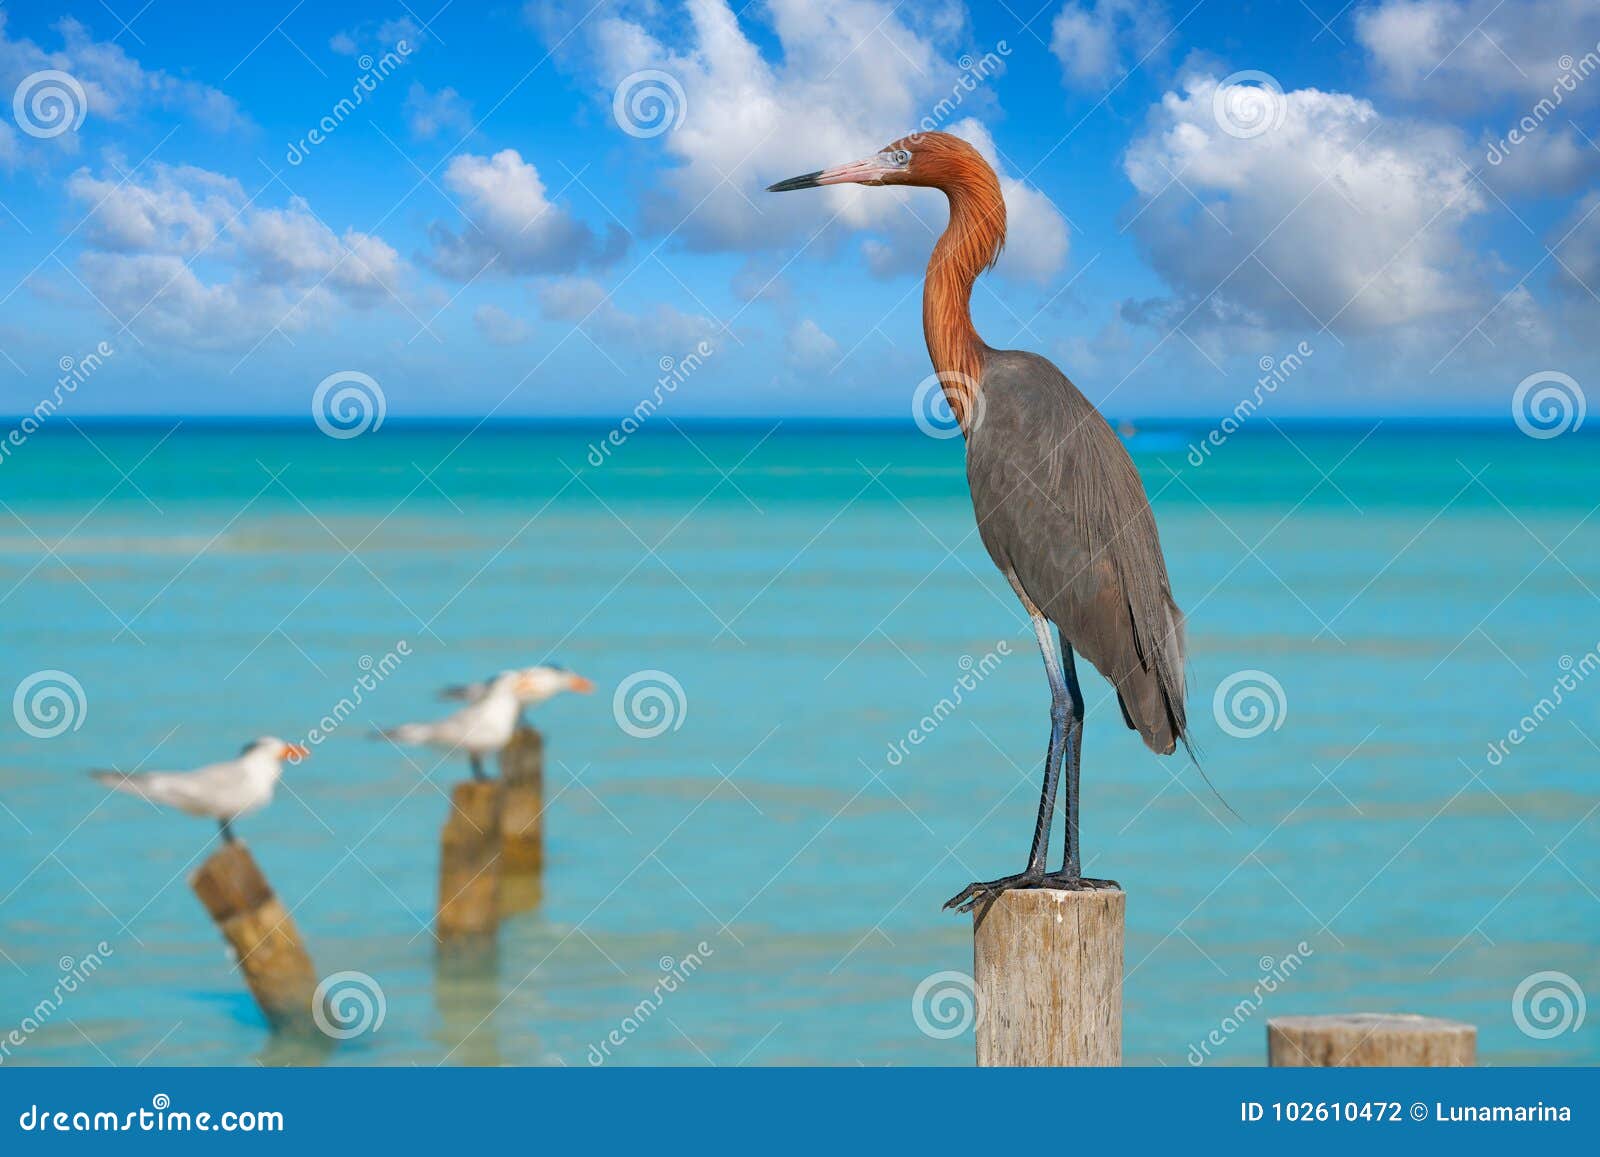 egretta rufescens or reddish egret heron bird